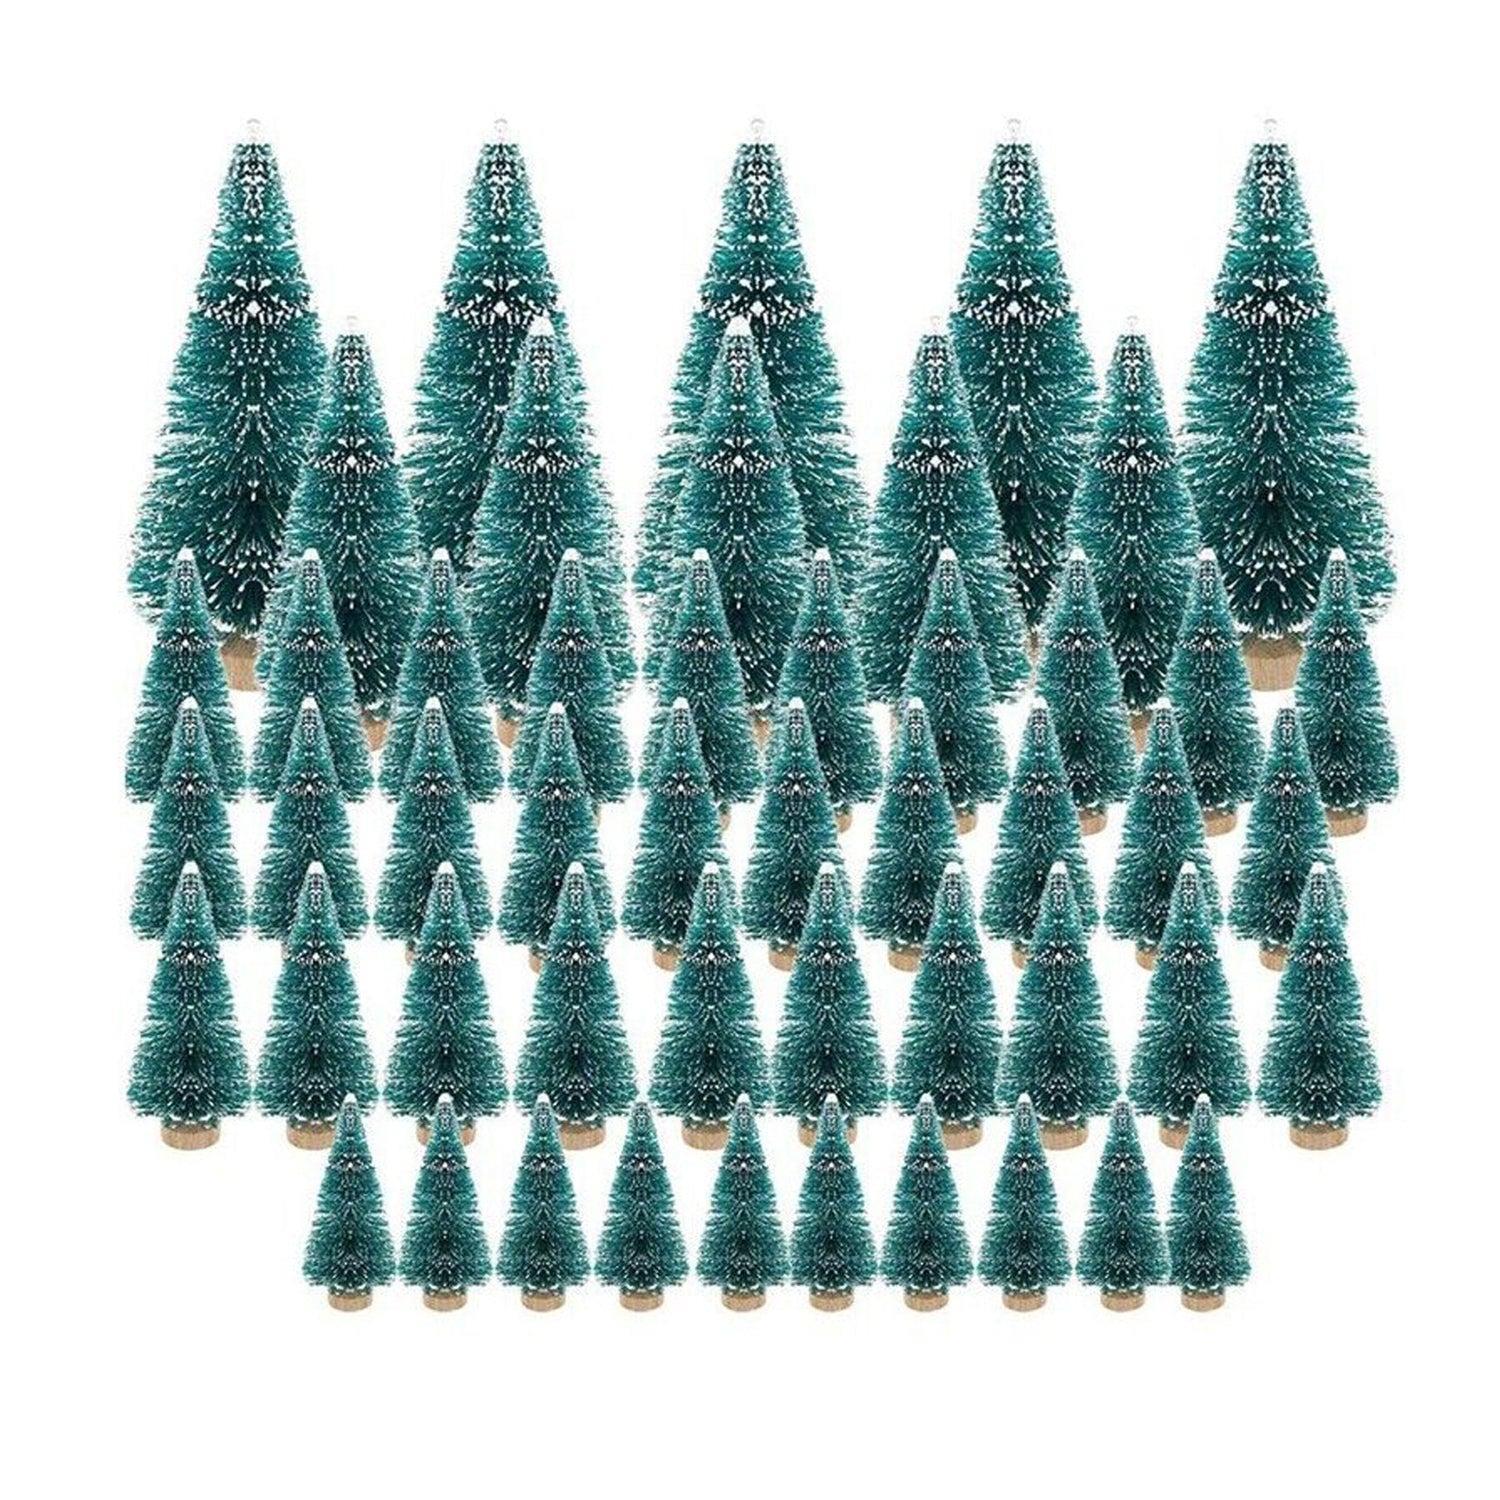 Miniature Artificial Christmas Pine Trees - 50pcs